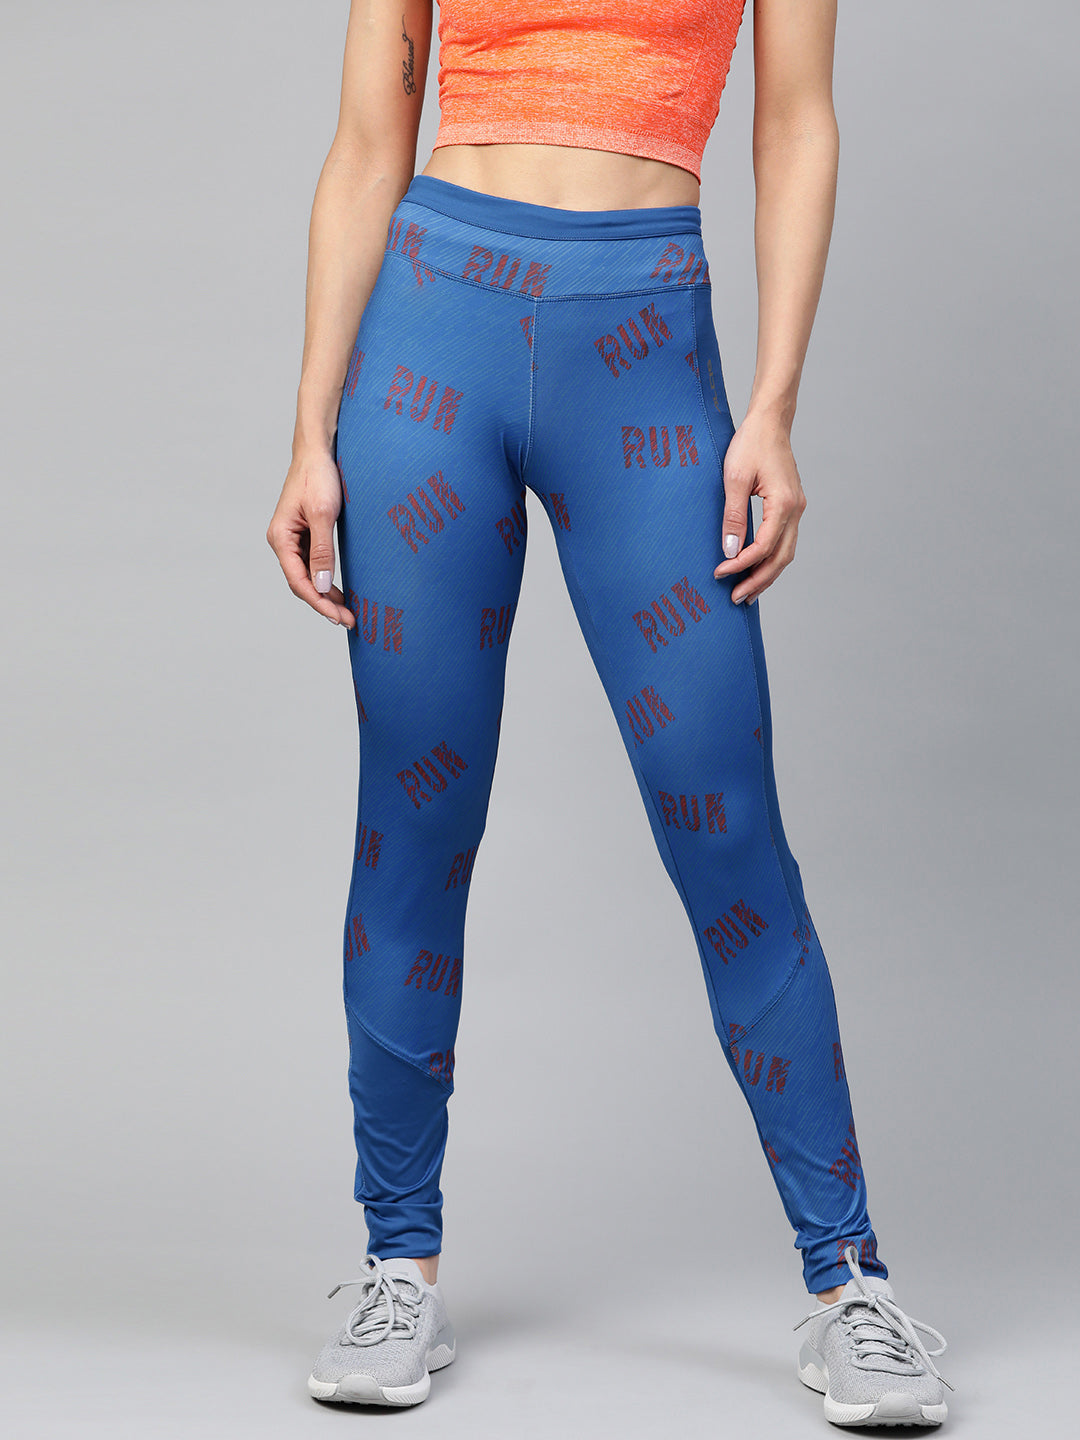 Alcis Women Blue & Orange Printed Running Tights